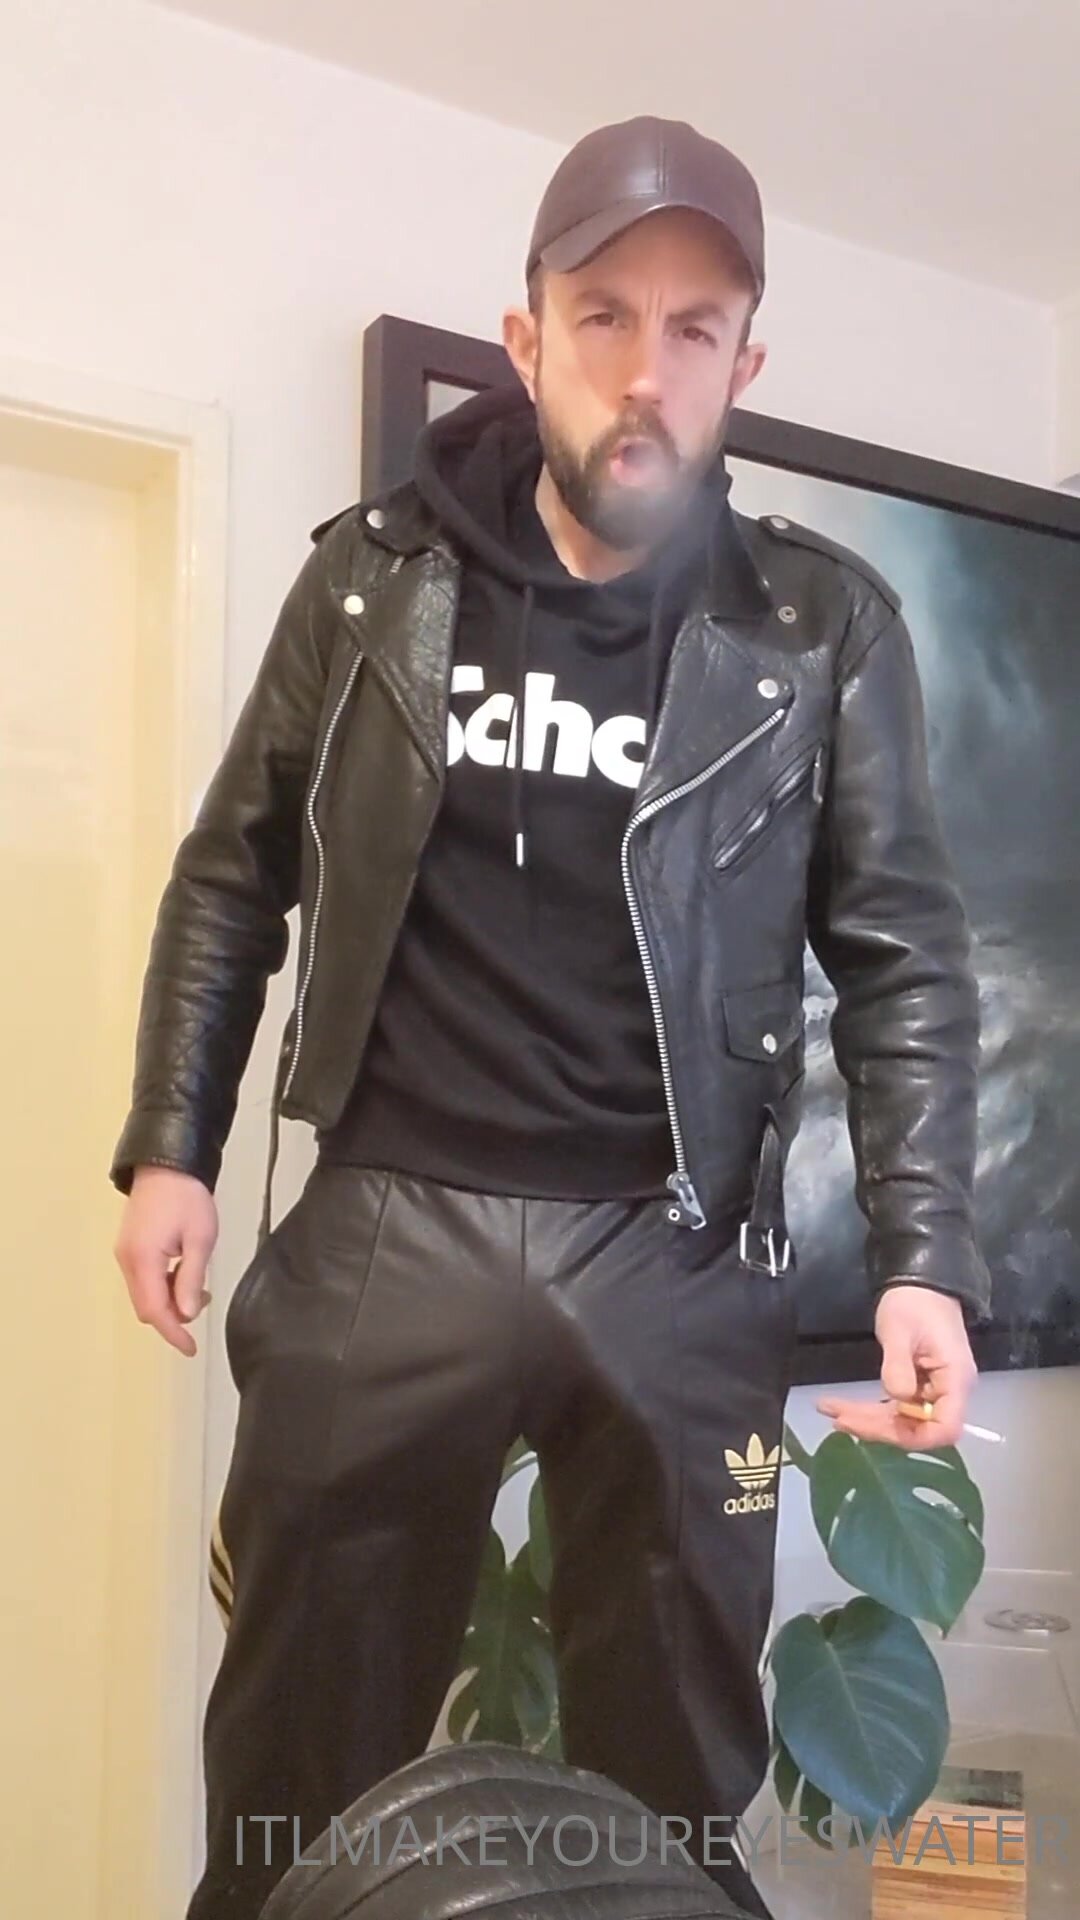 Cuming on leatherjacket